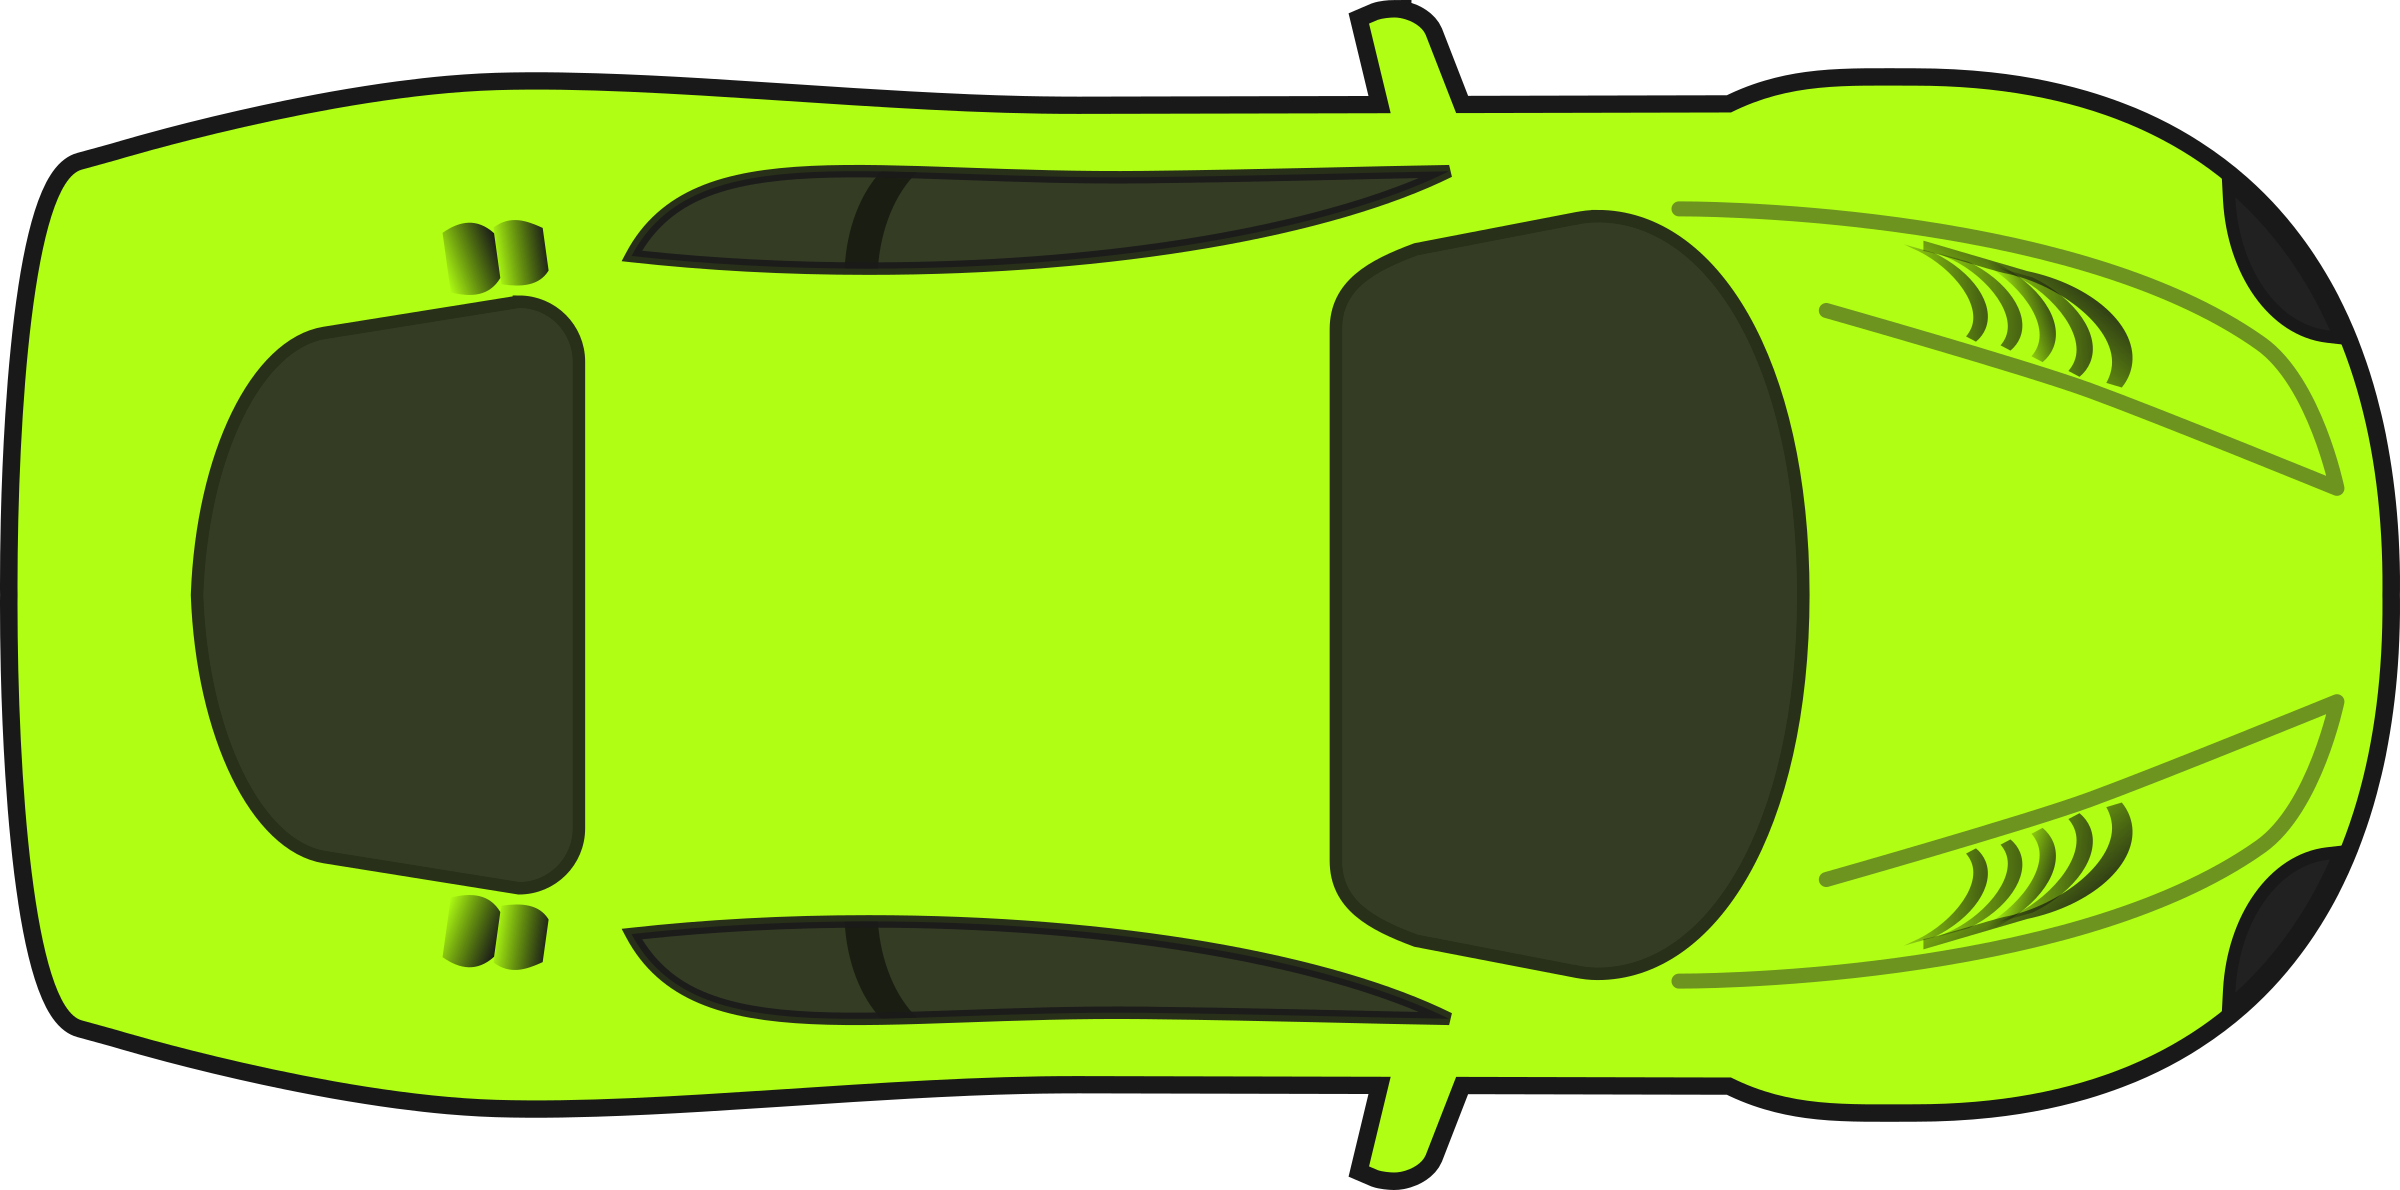 Race Car Clipart Transparent Car - Car Top View Clipart.